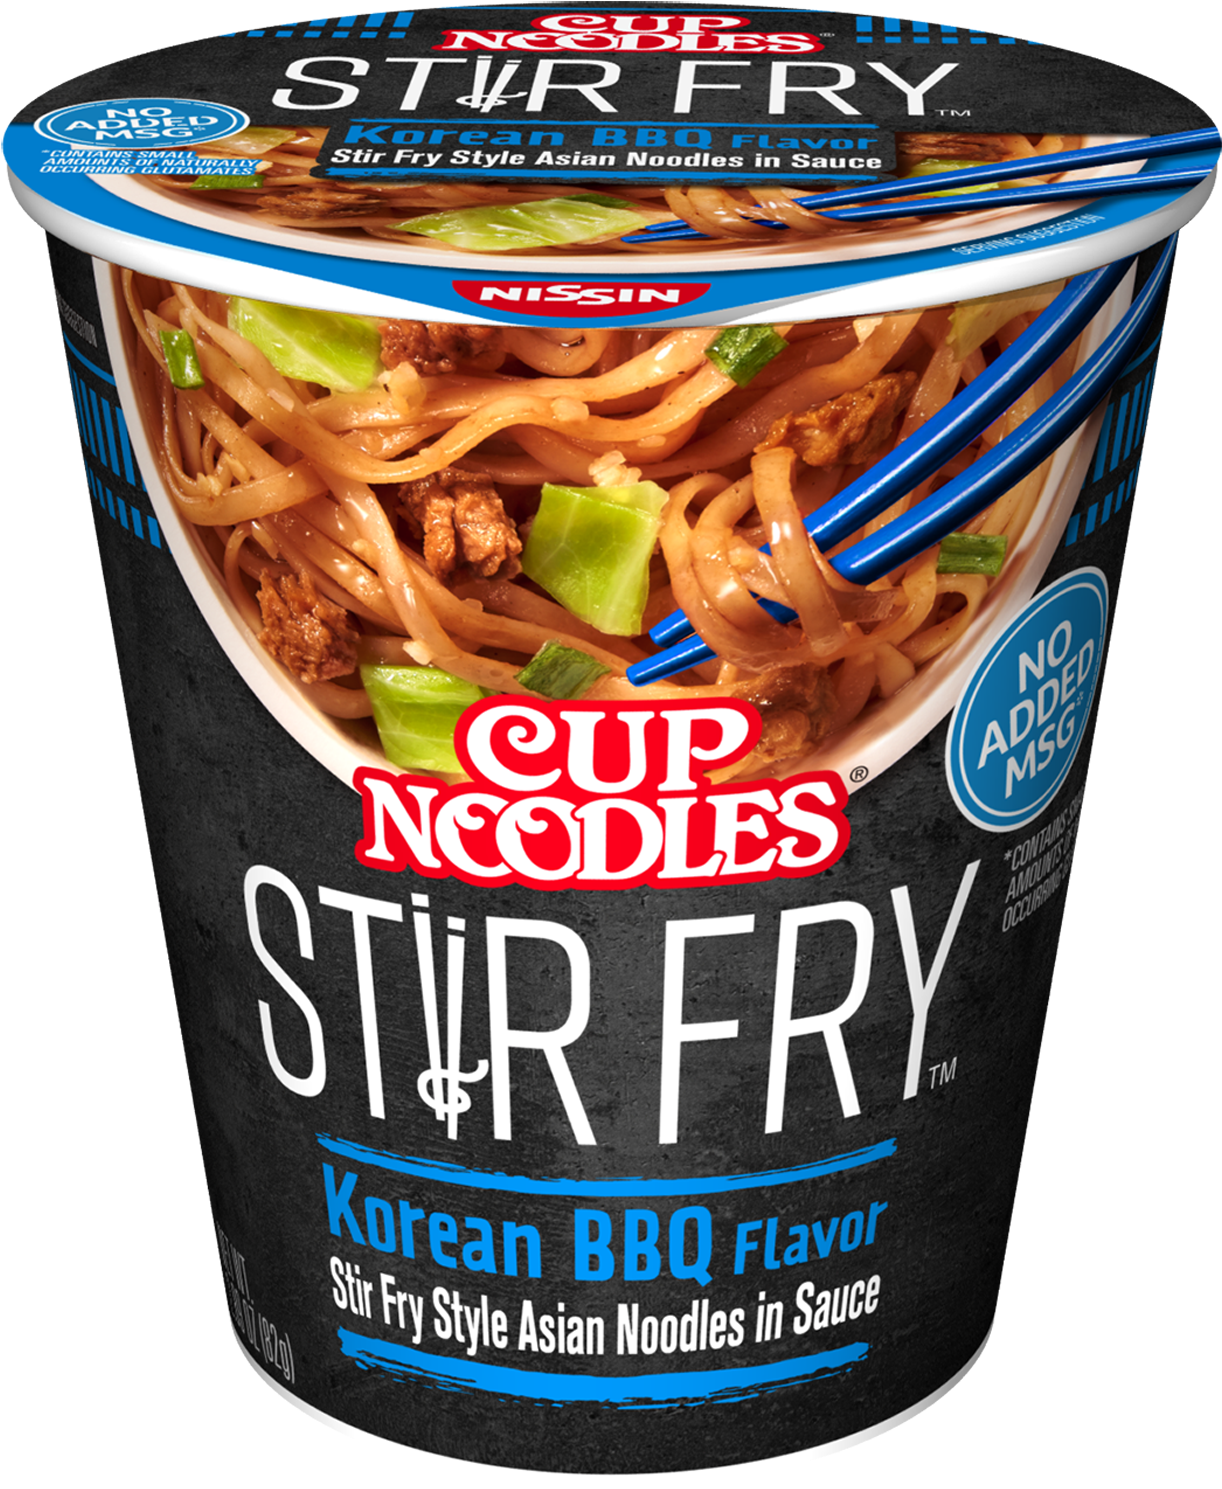 Nissin Cup Noodles Stir Fry Korean B B Q Flavor PNG